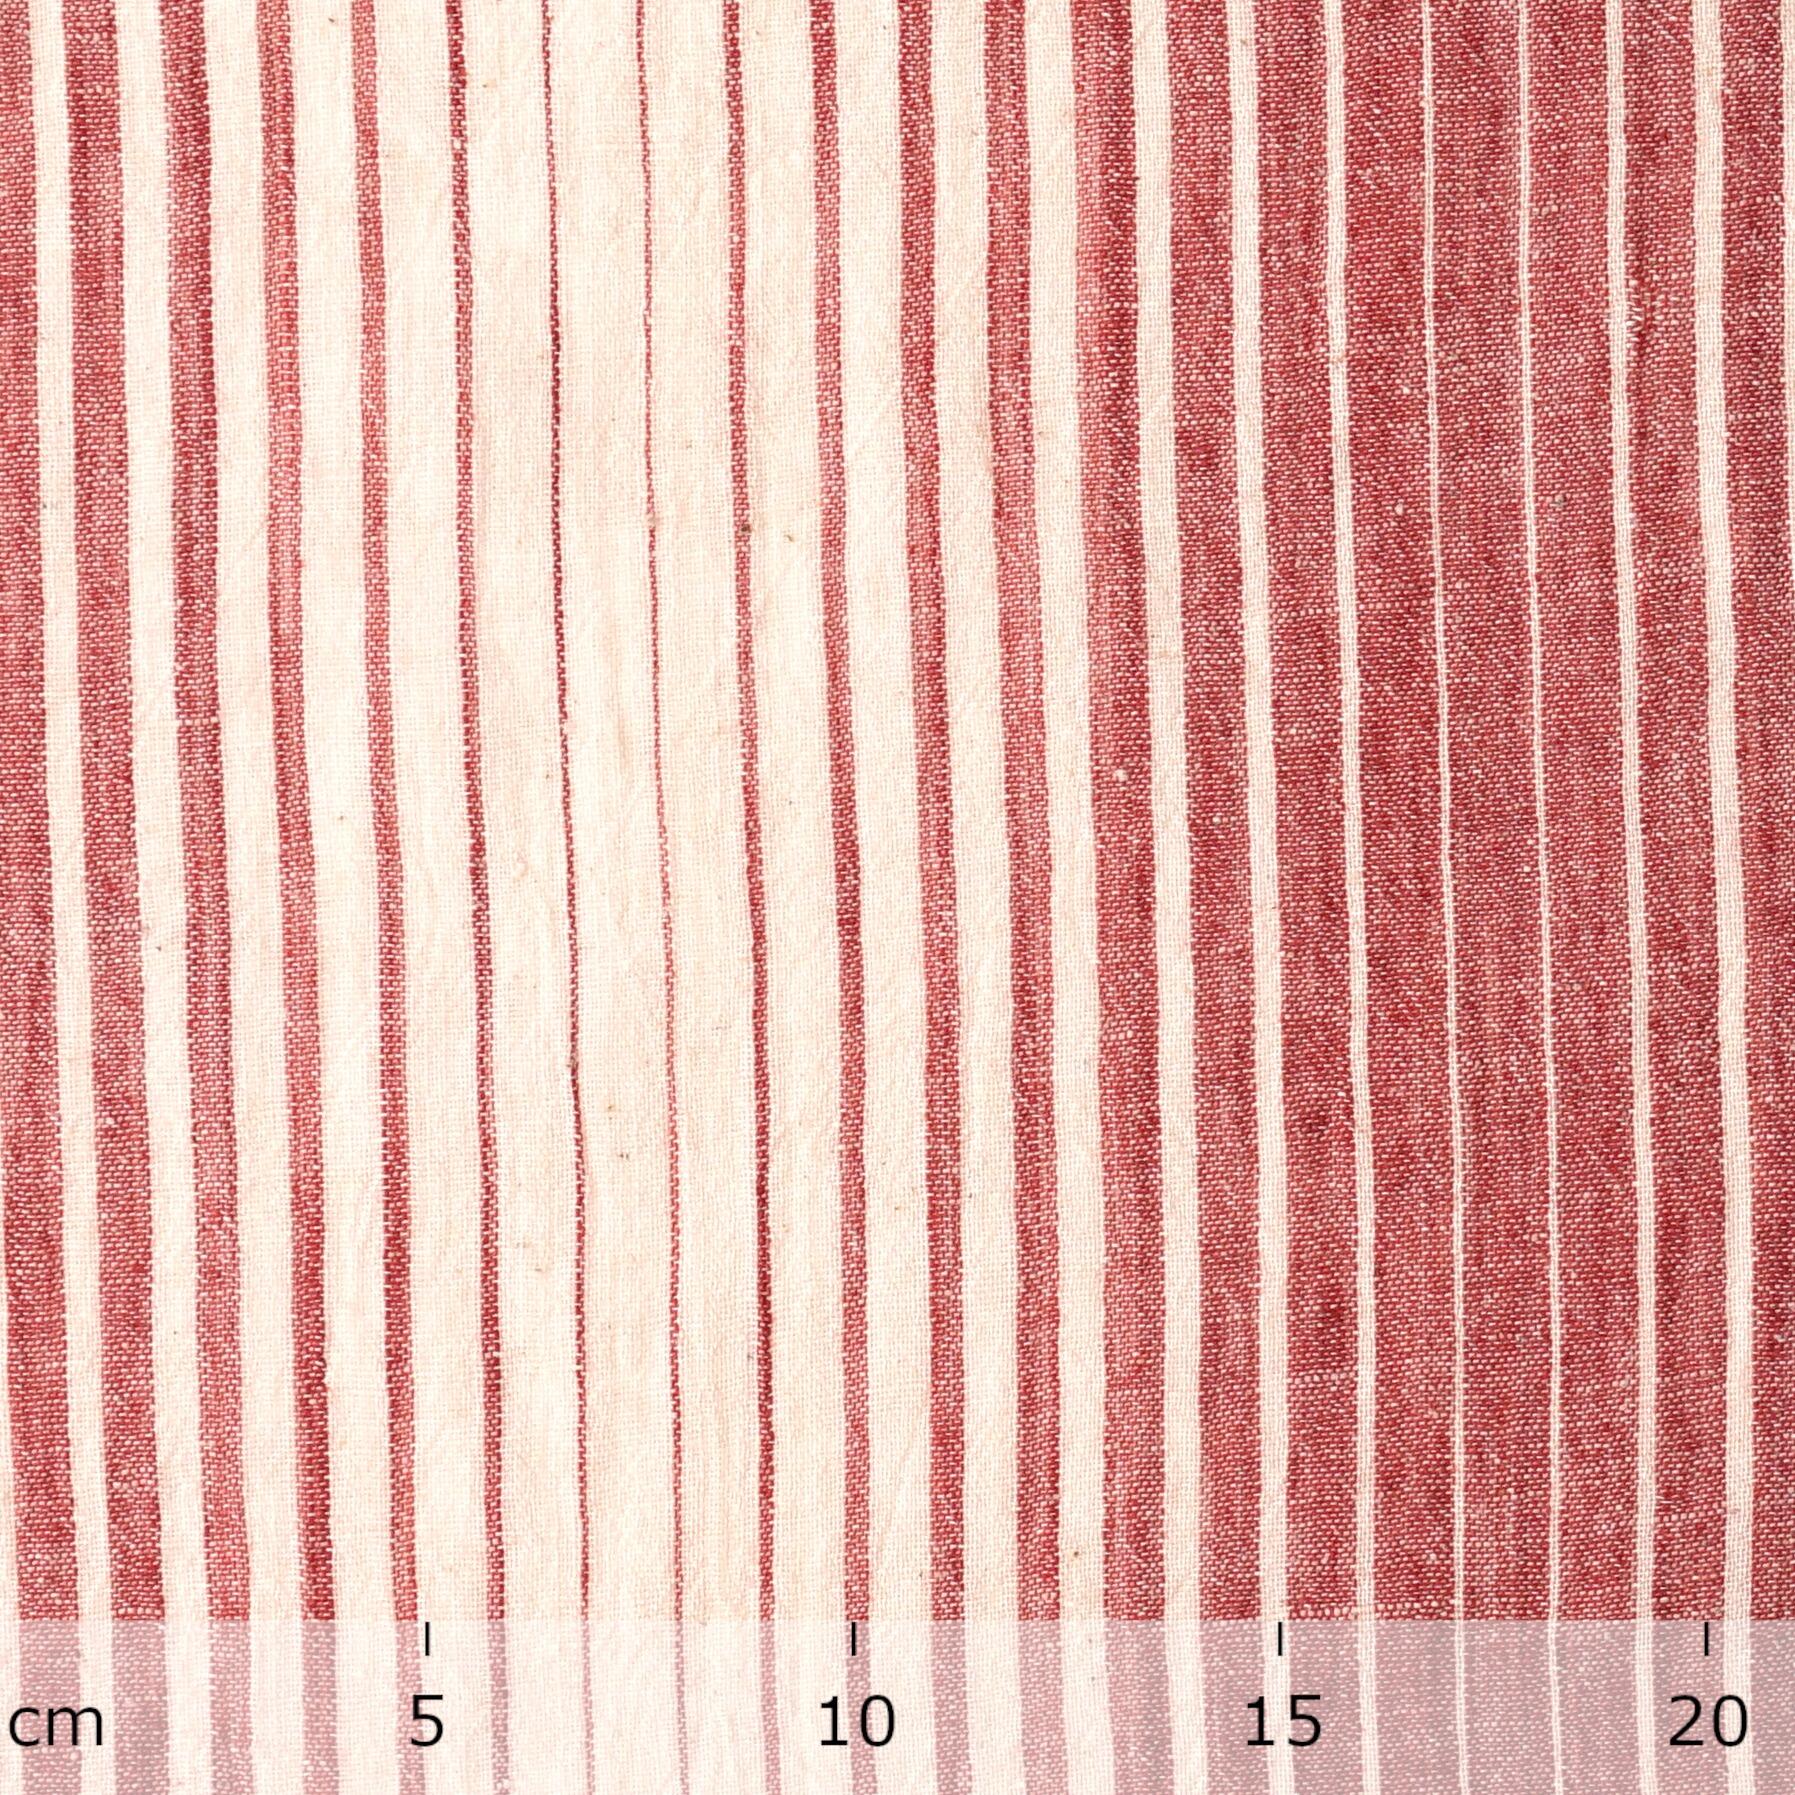 KHE04 - Organic Kala Cotton - Handloom Woven - Natural Dye - Red Alizarin Dye - Fading Stripes - One By One - Ruler